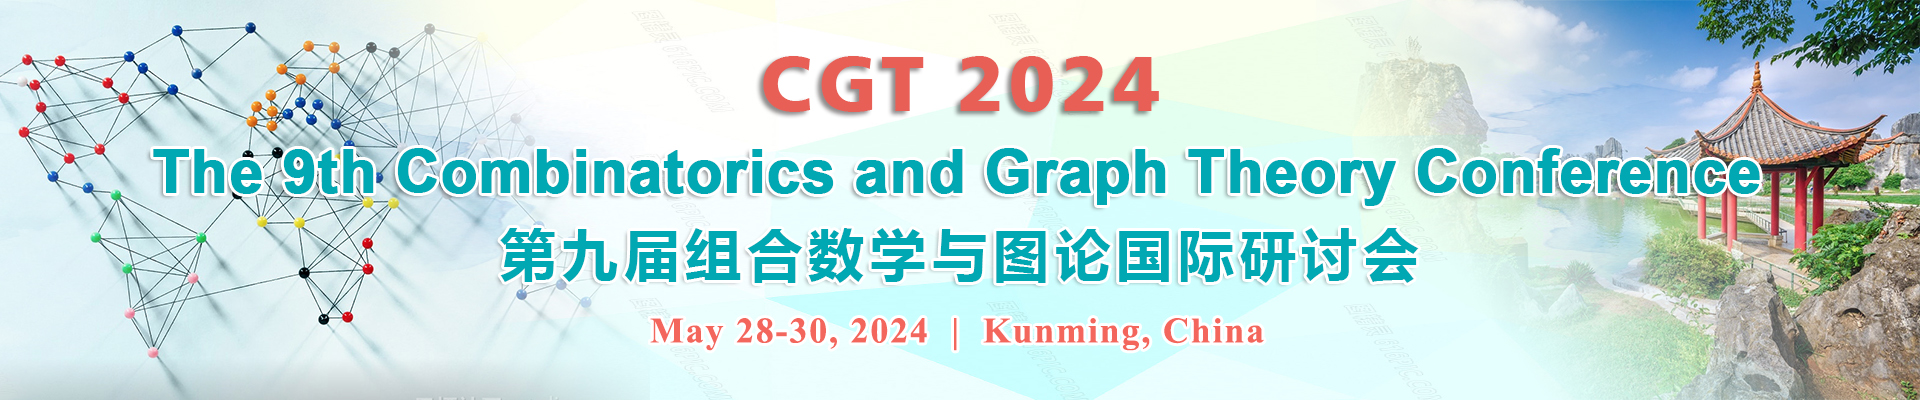 The 9th Combinatorics and Graph Theory Conference (CGT 2024), Kunming, Yunnan, China